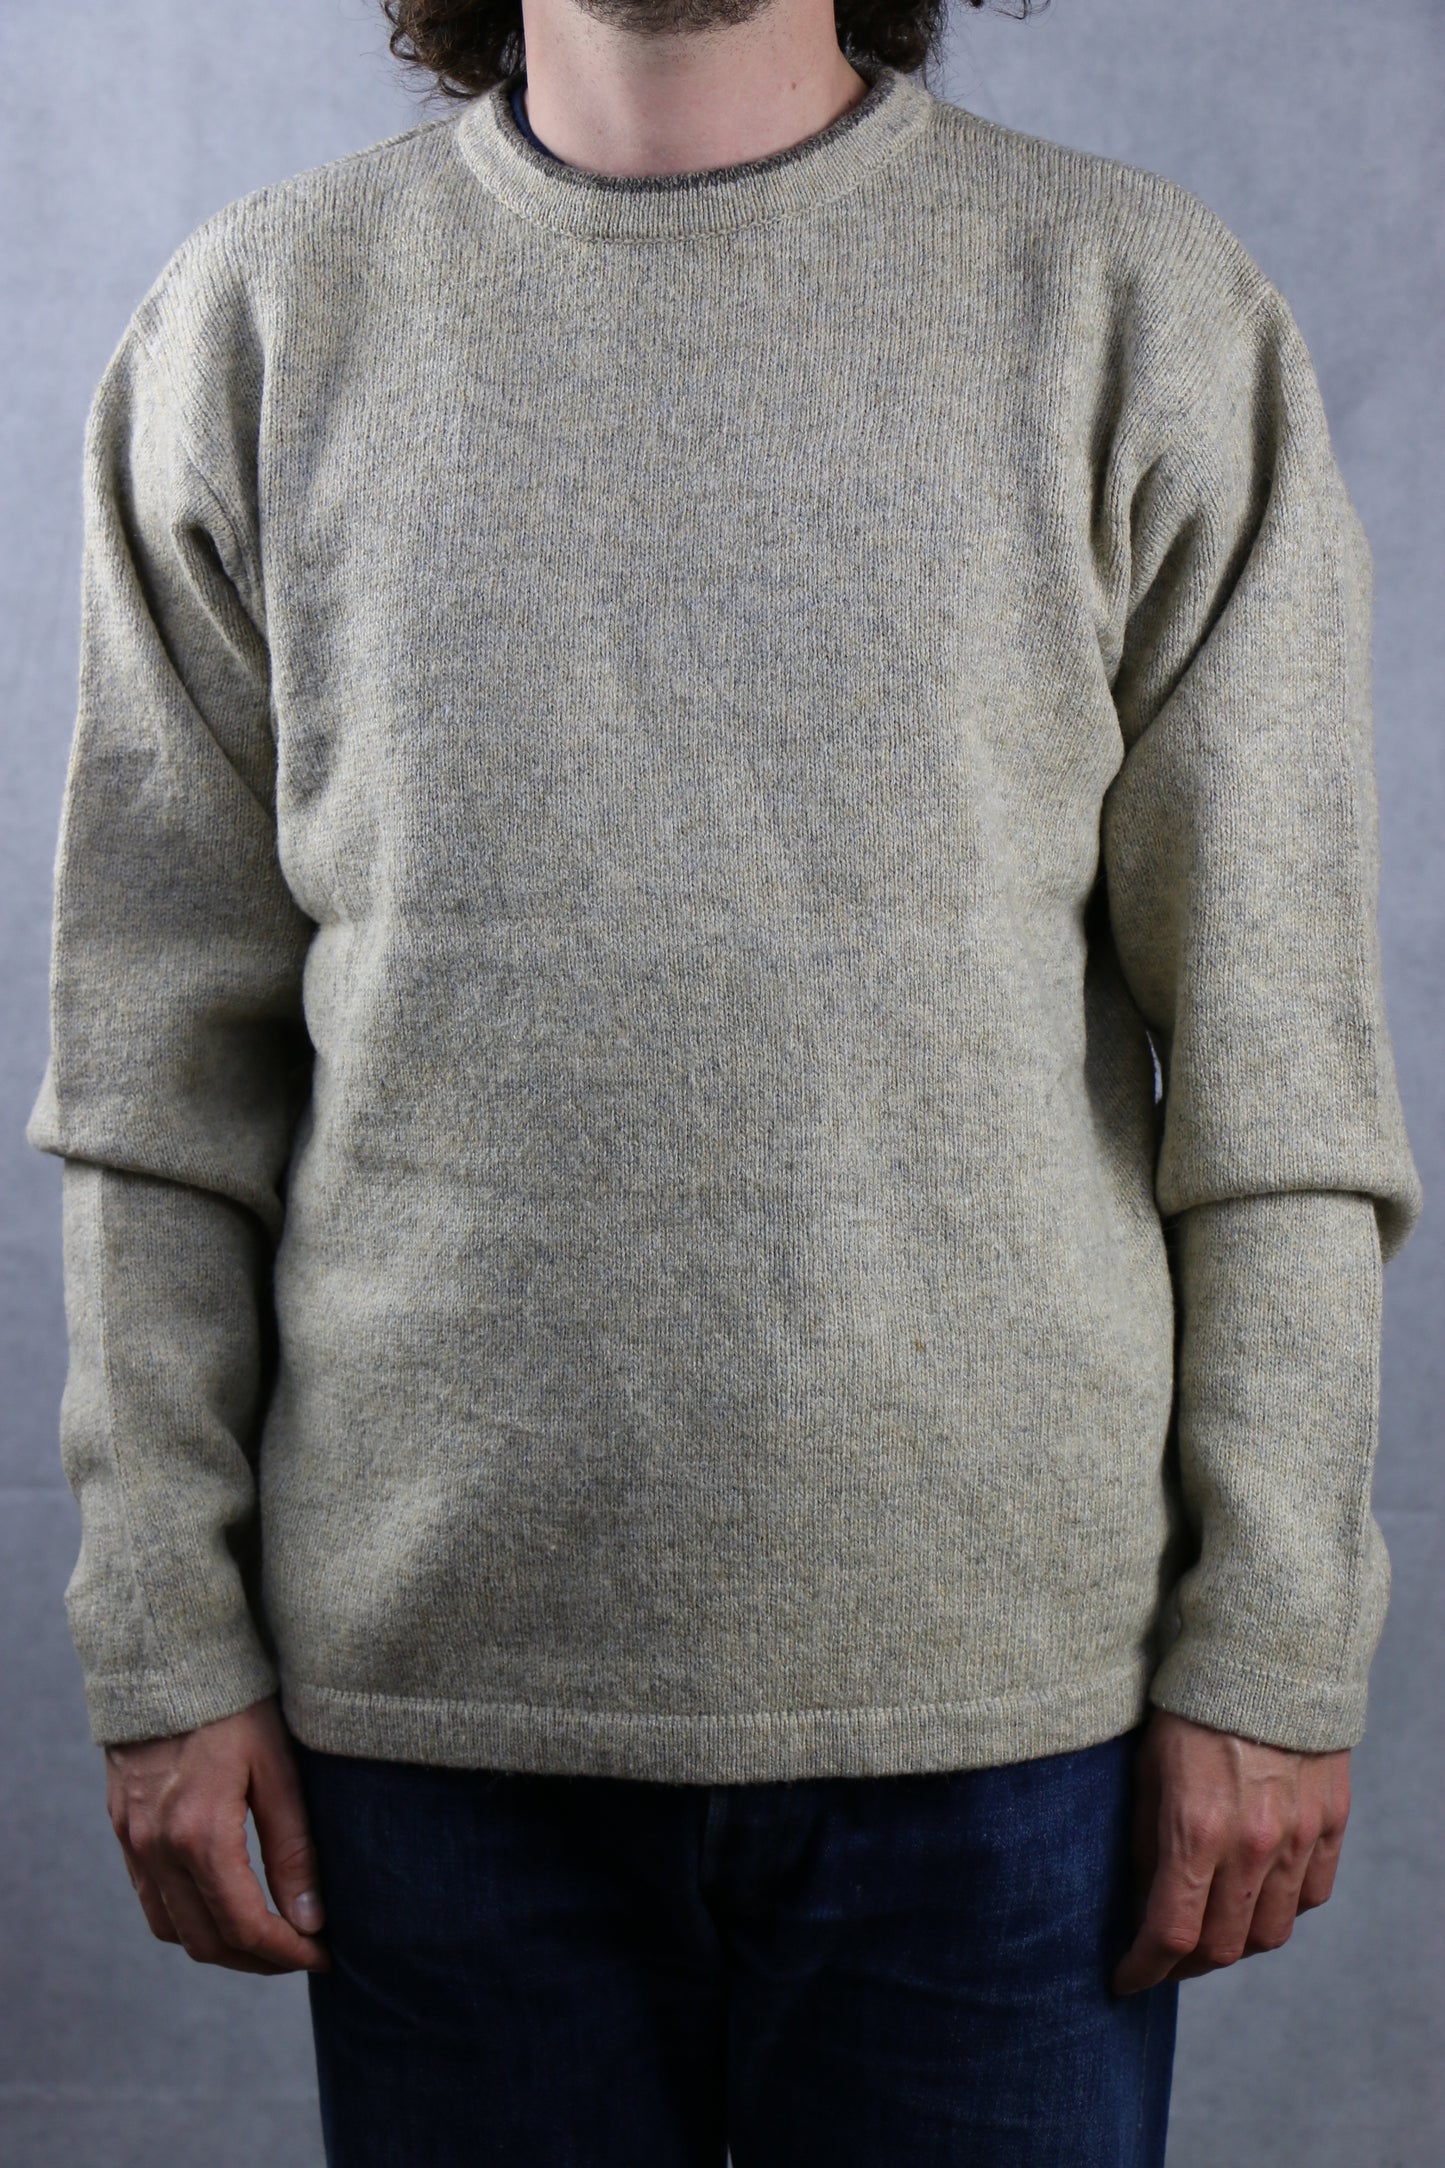 Woolrich Crewneck Sweater - vintage clothing clochard92.com